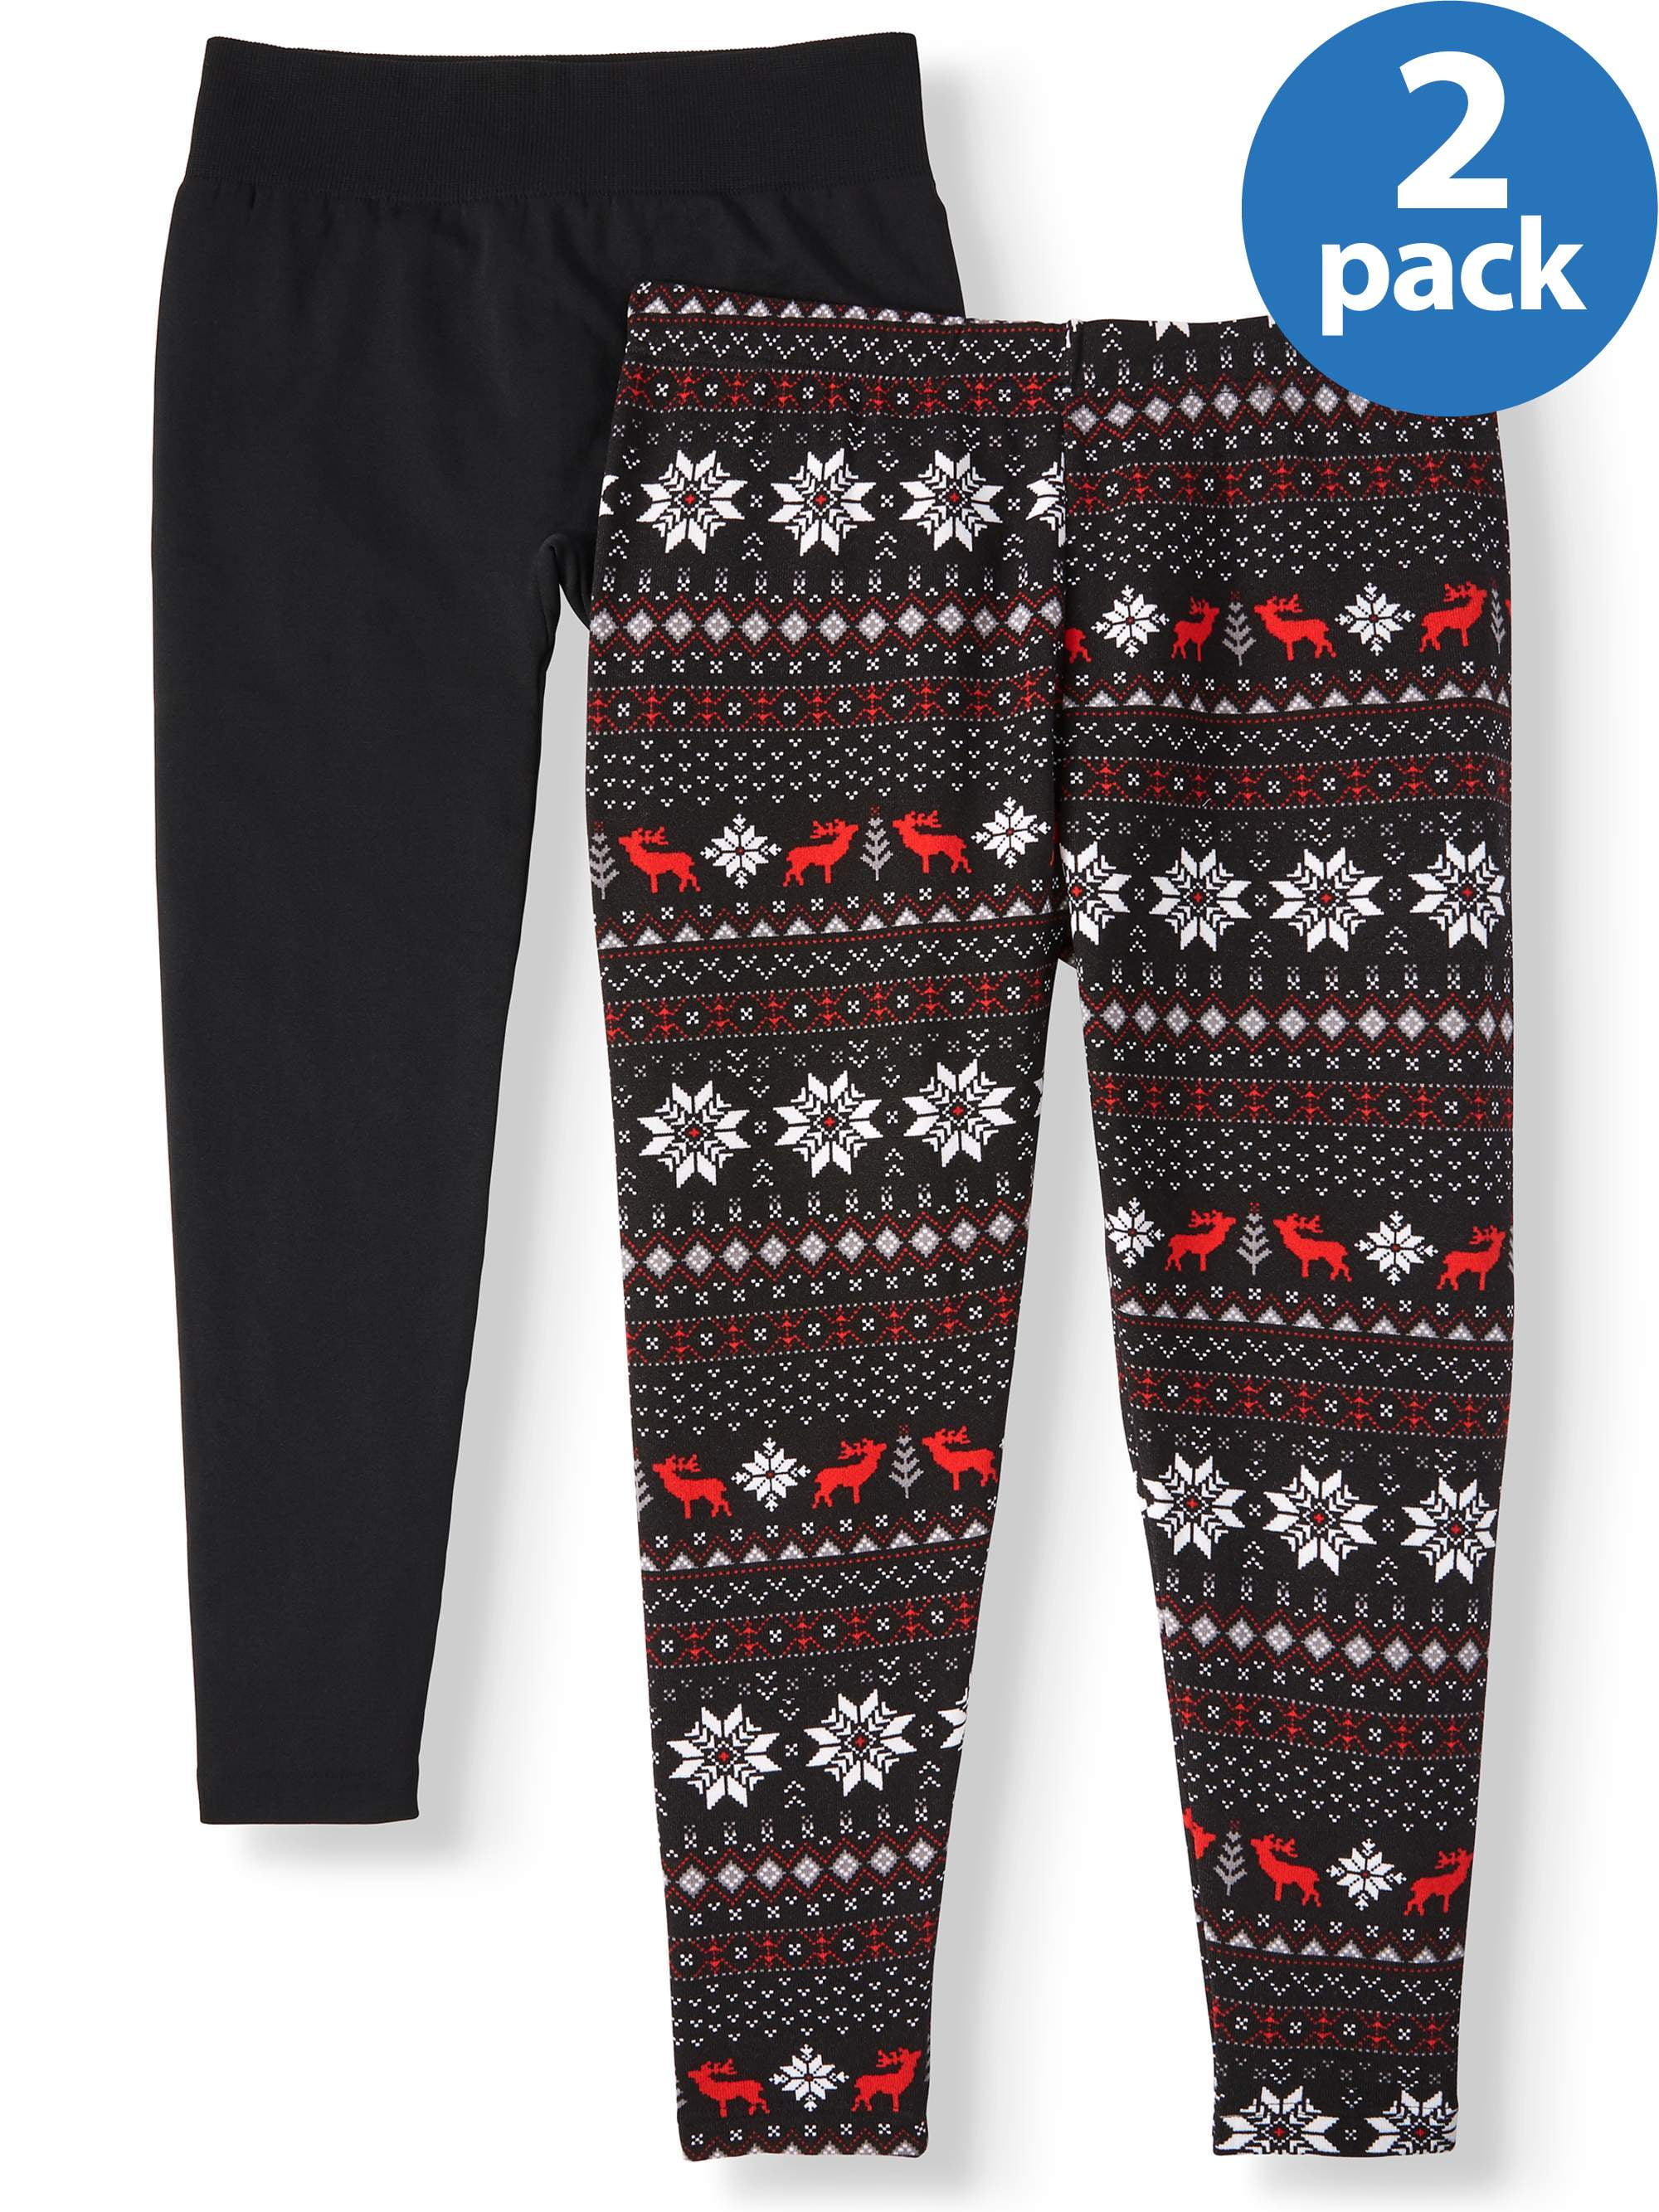 Terra & Sky Women's Plus Size Printed Holiday Super Soft Fleece Lined  Leggings, 2-Pack 